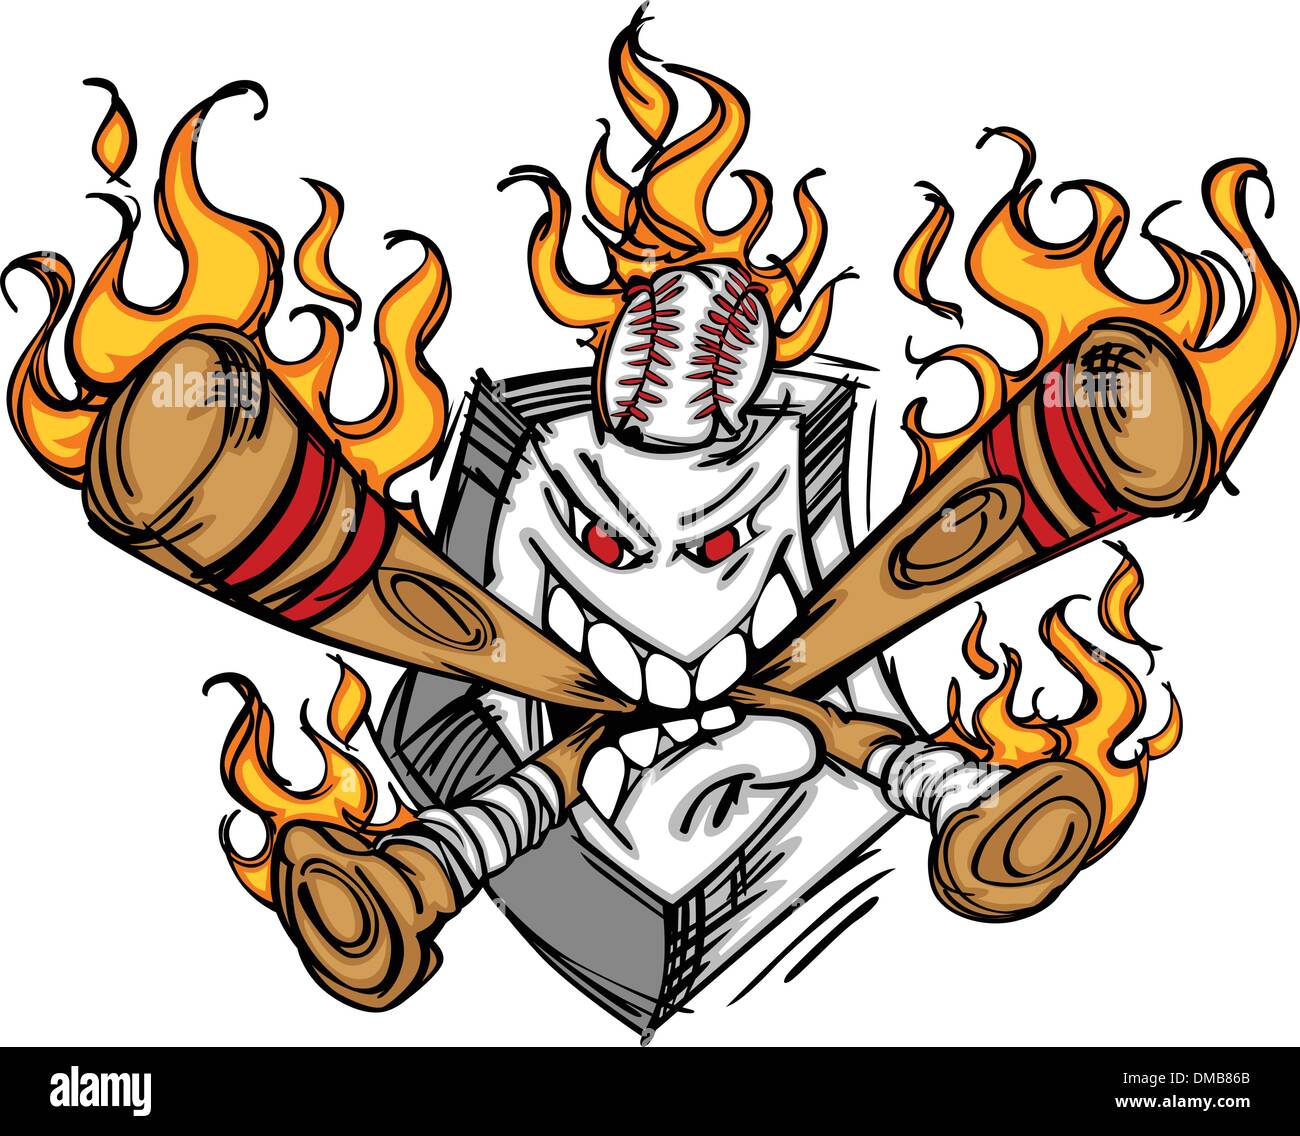 Softball Baseball Plate and Bats Flaming Cartoon Logo Stock Vector